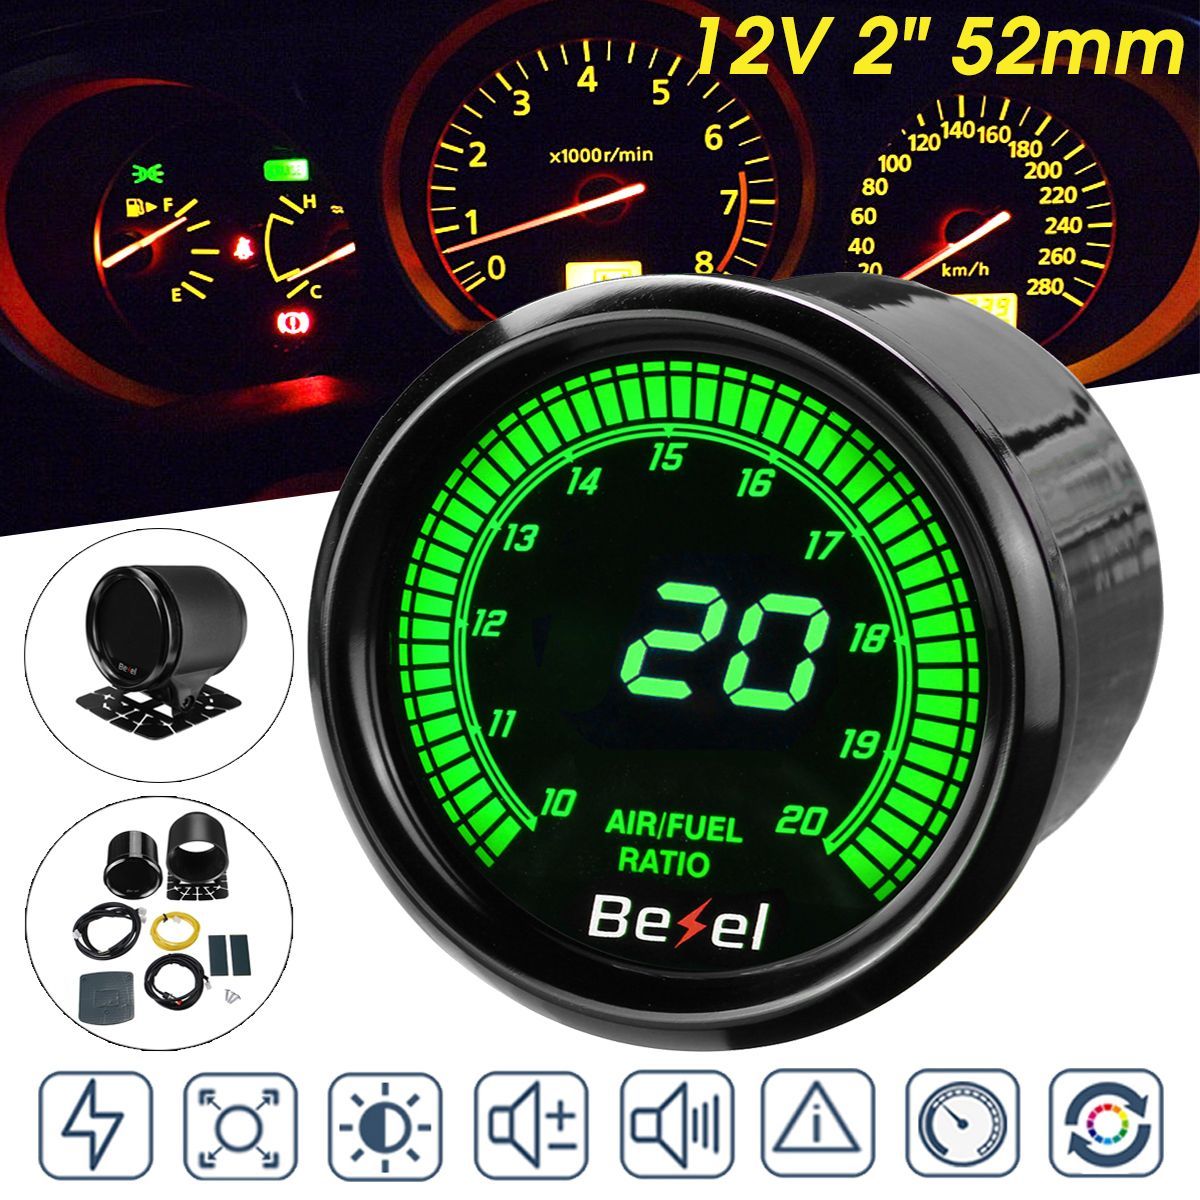 EVO-2quot-52mm-Car-Auto-Air--Fuel-Ratio-Gauge-Meter-AFR-Digital-LED-Display-Black-Face-1612143